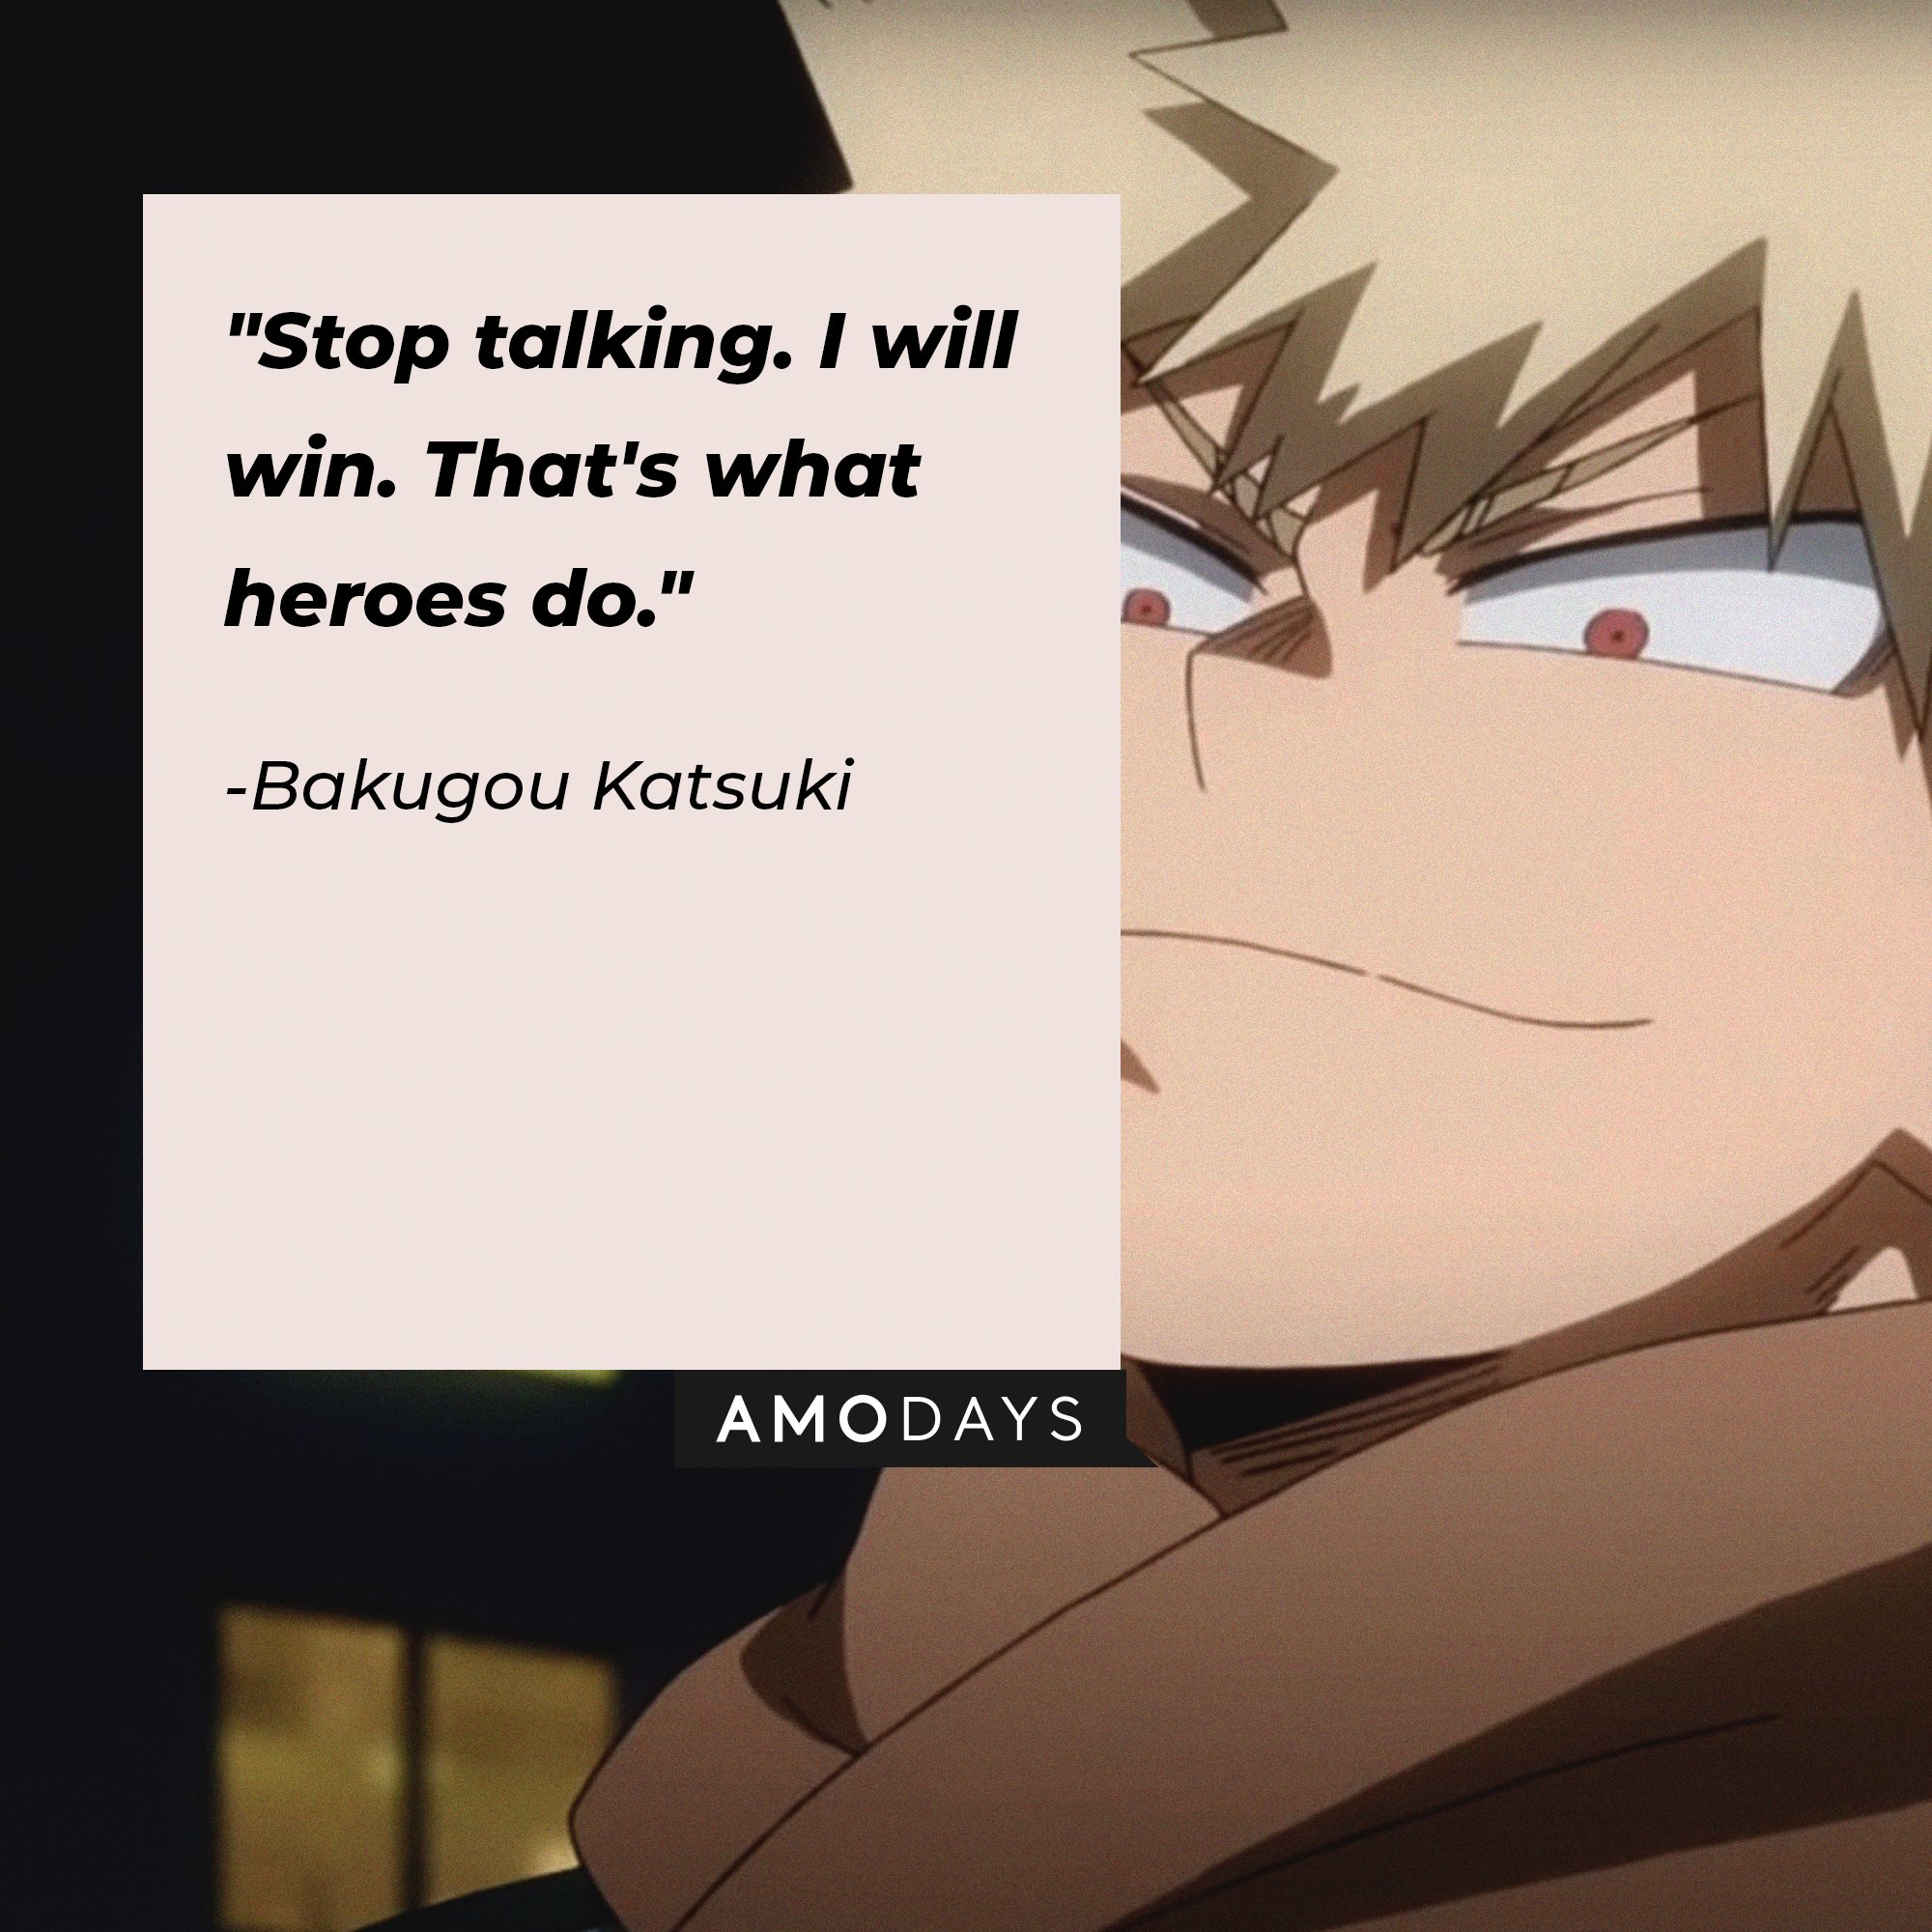 Bakugou Katsuki’s quote: "Stop talking. I will win. That's what heroes do." | Image: AmoDays